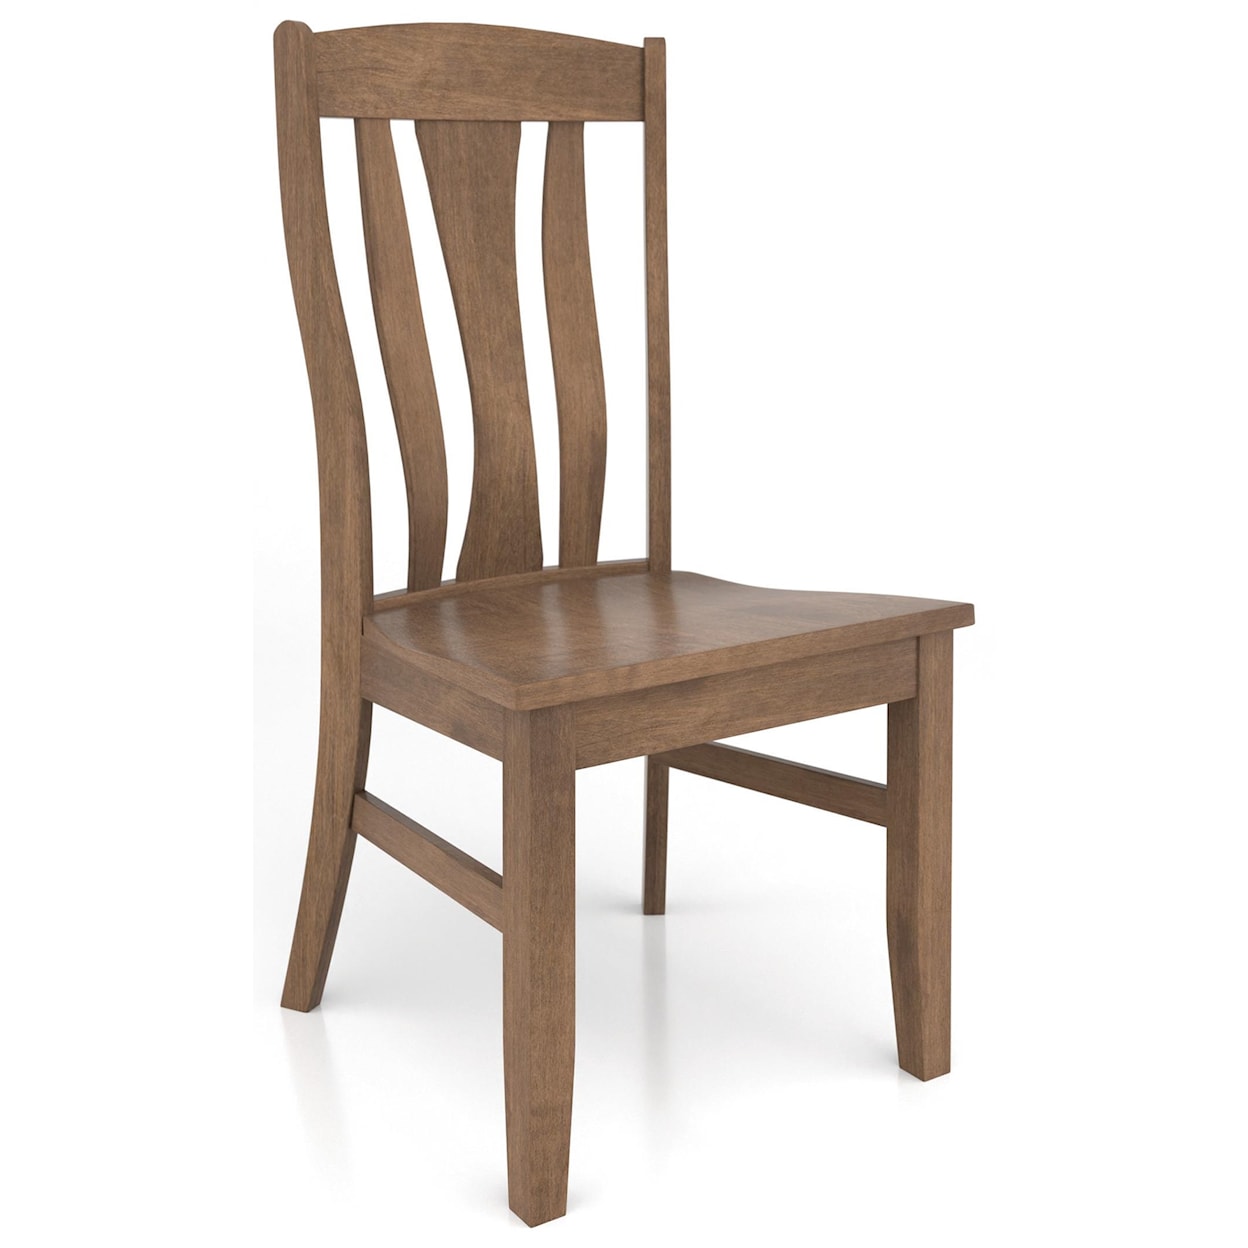 Wengerd Wood Products Samba Side Chair